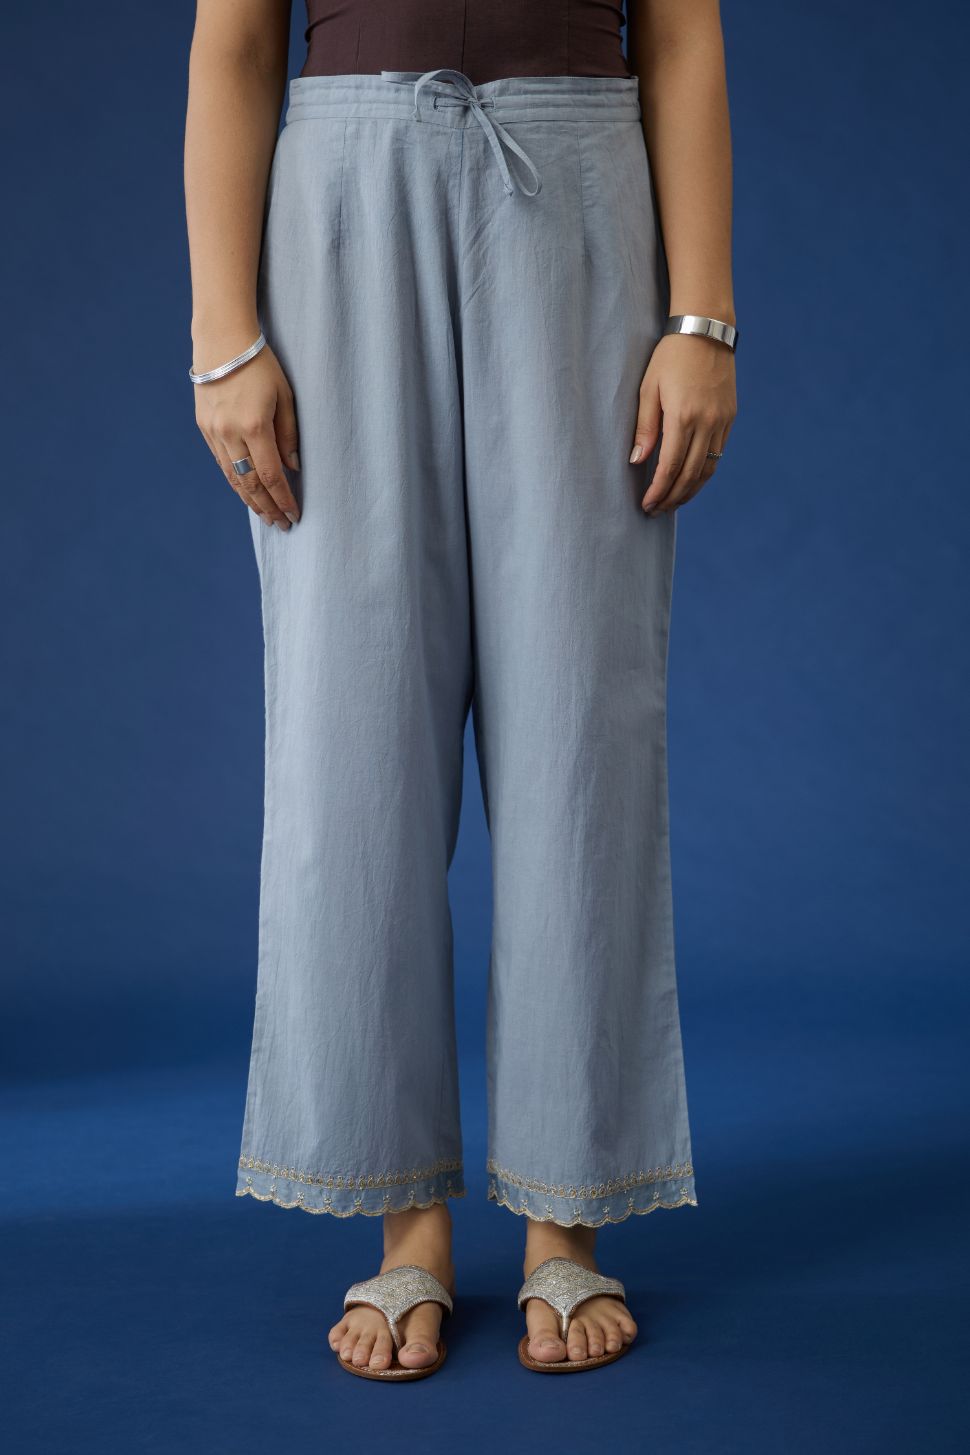 Bluish grey cotton straight pants with gota and dori embroidery at bottom hem (Pants)